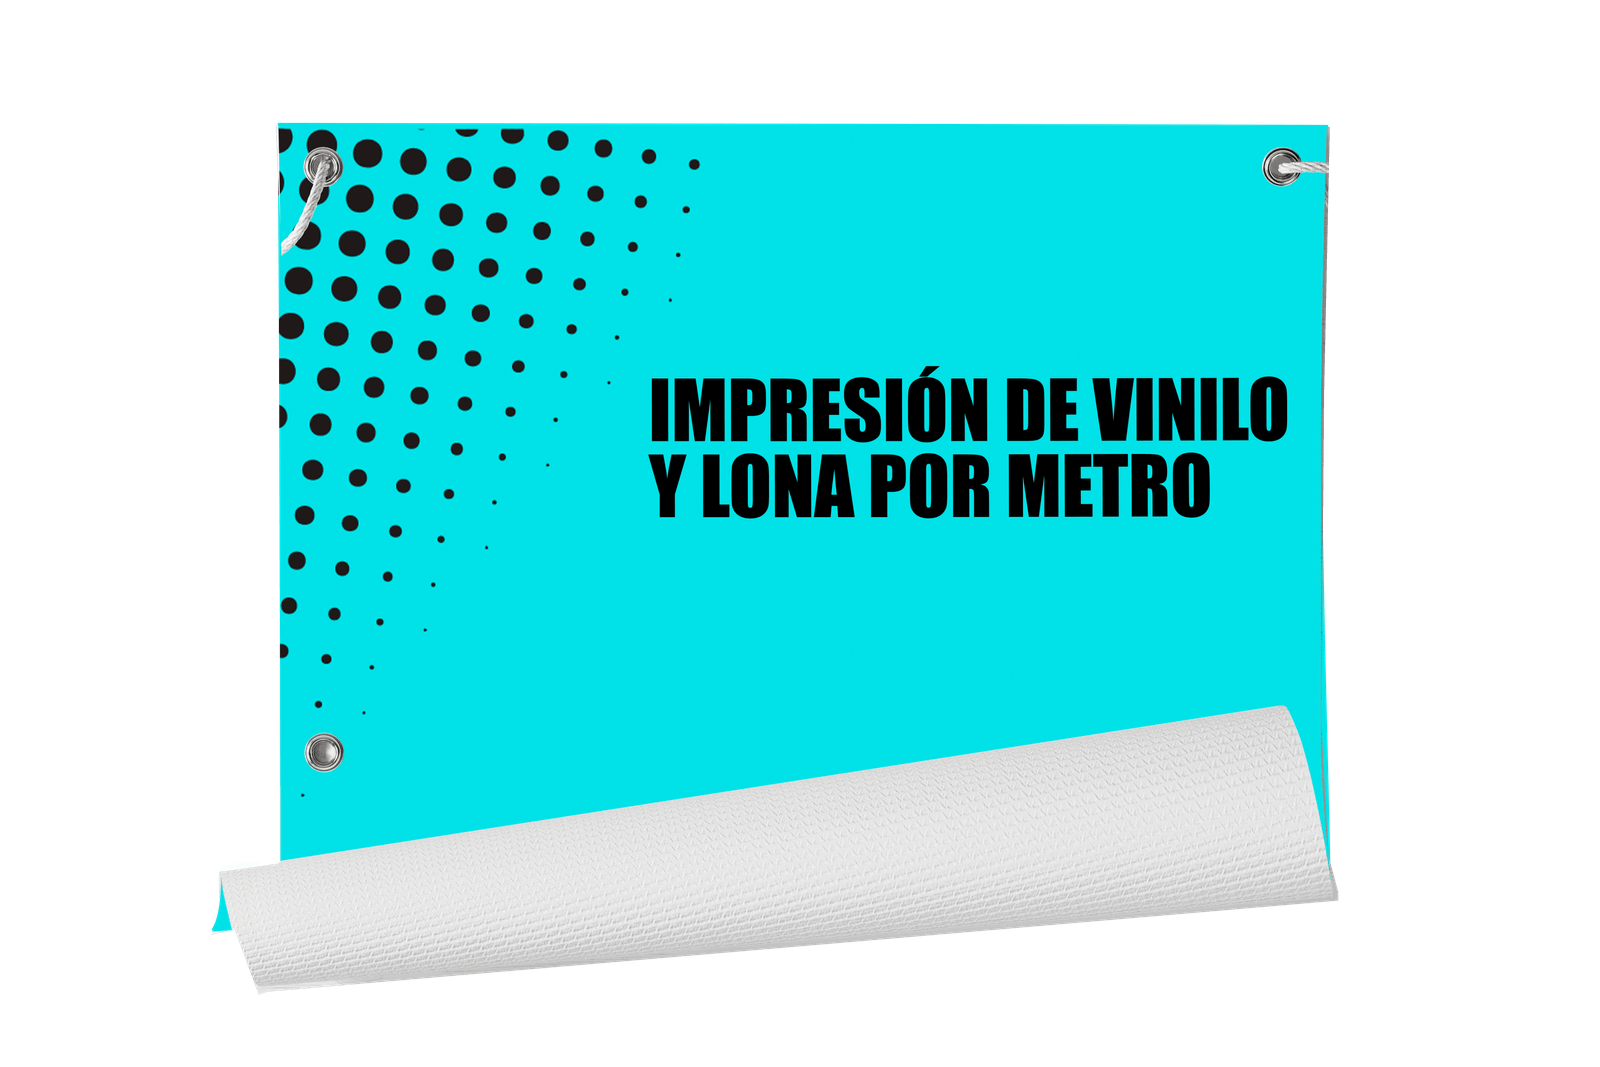 IMPRESION DE VINILO Y LONA POR METRO